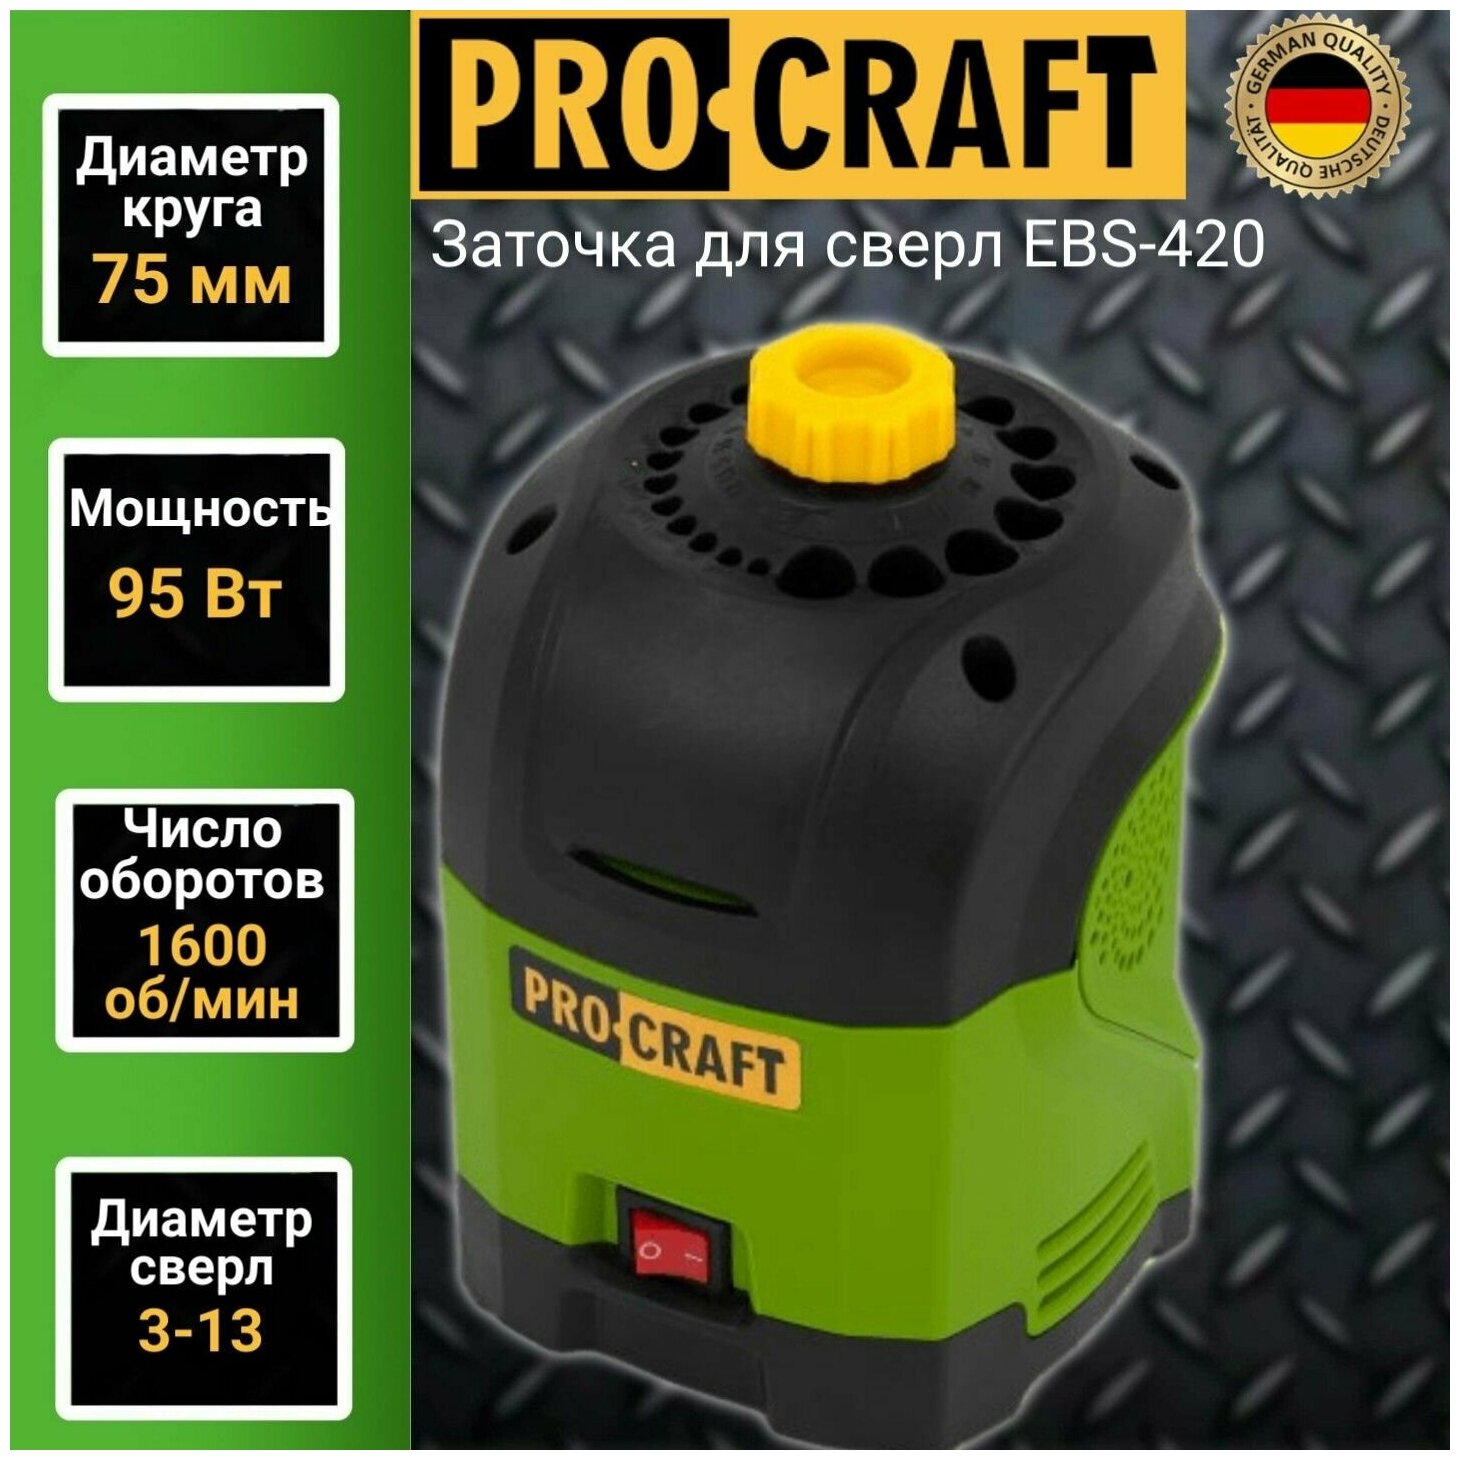     Proraft EBS-420, 95, 1600/